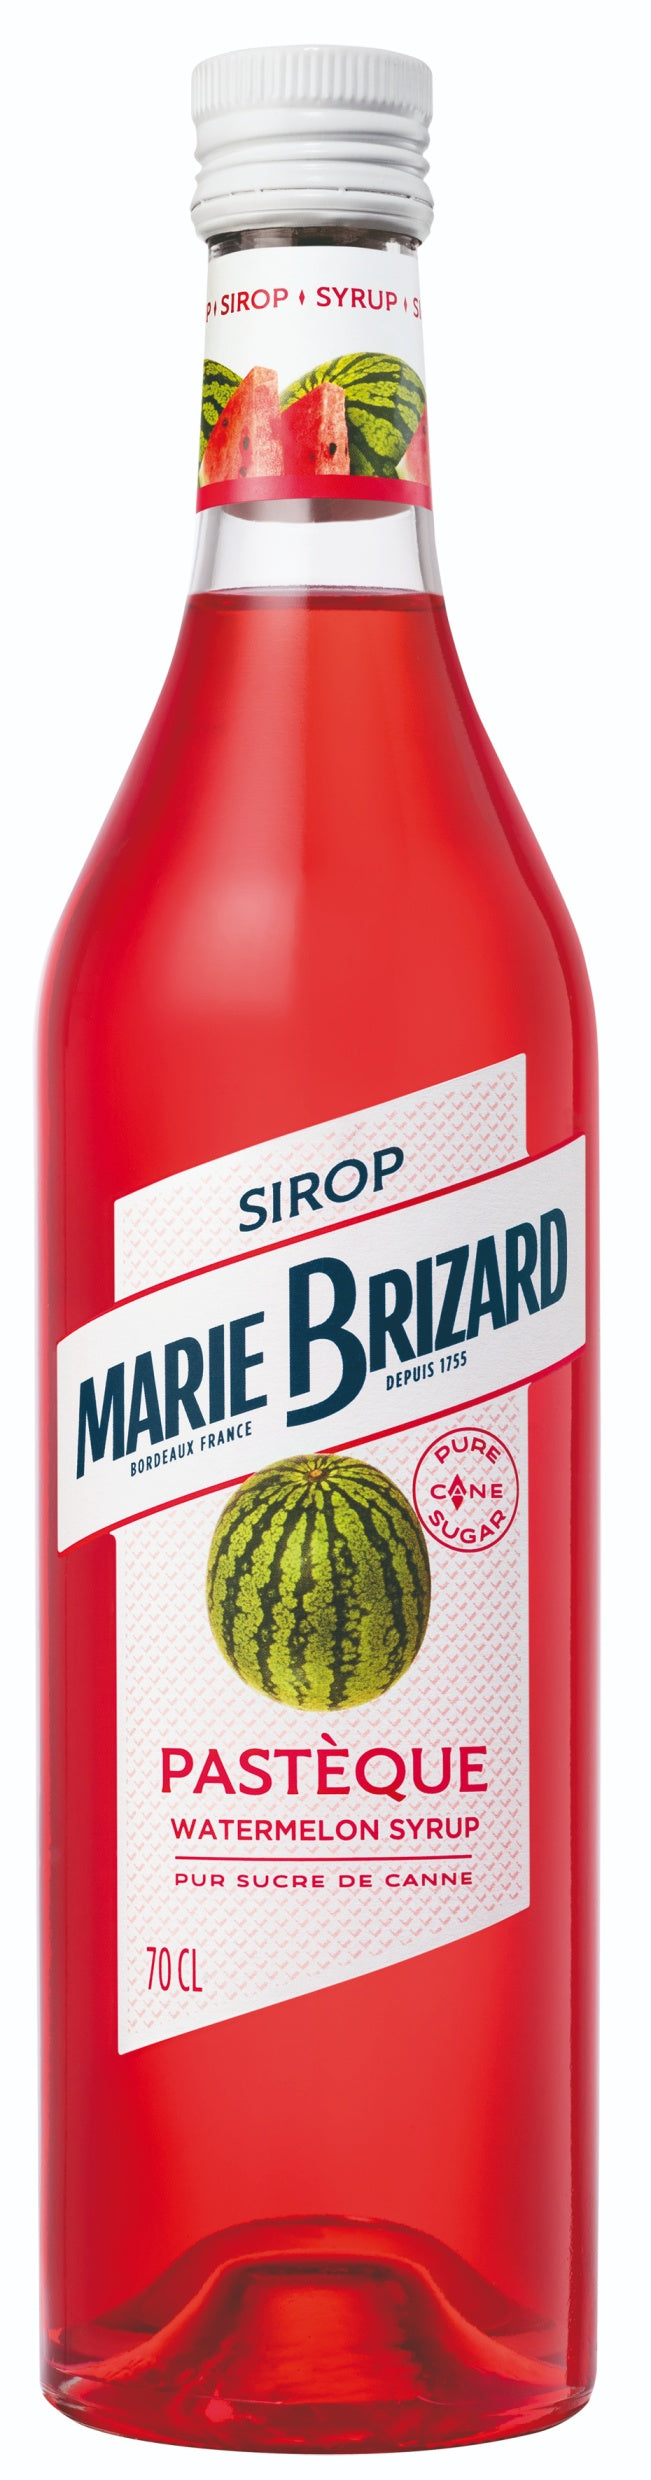 MARIE BRIZARD SIROP PASTEQUE 70CL